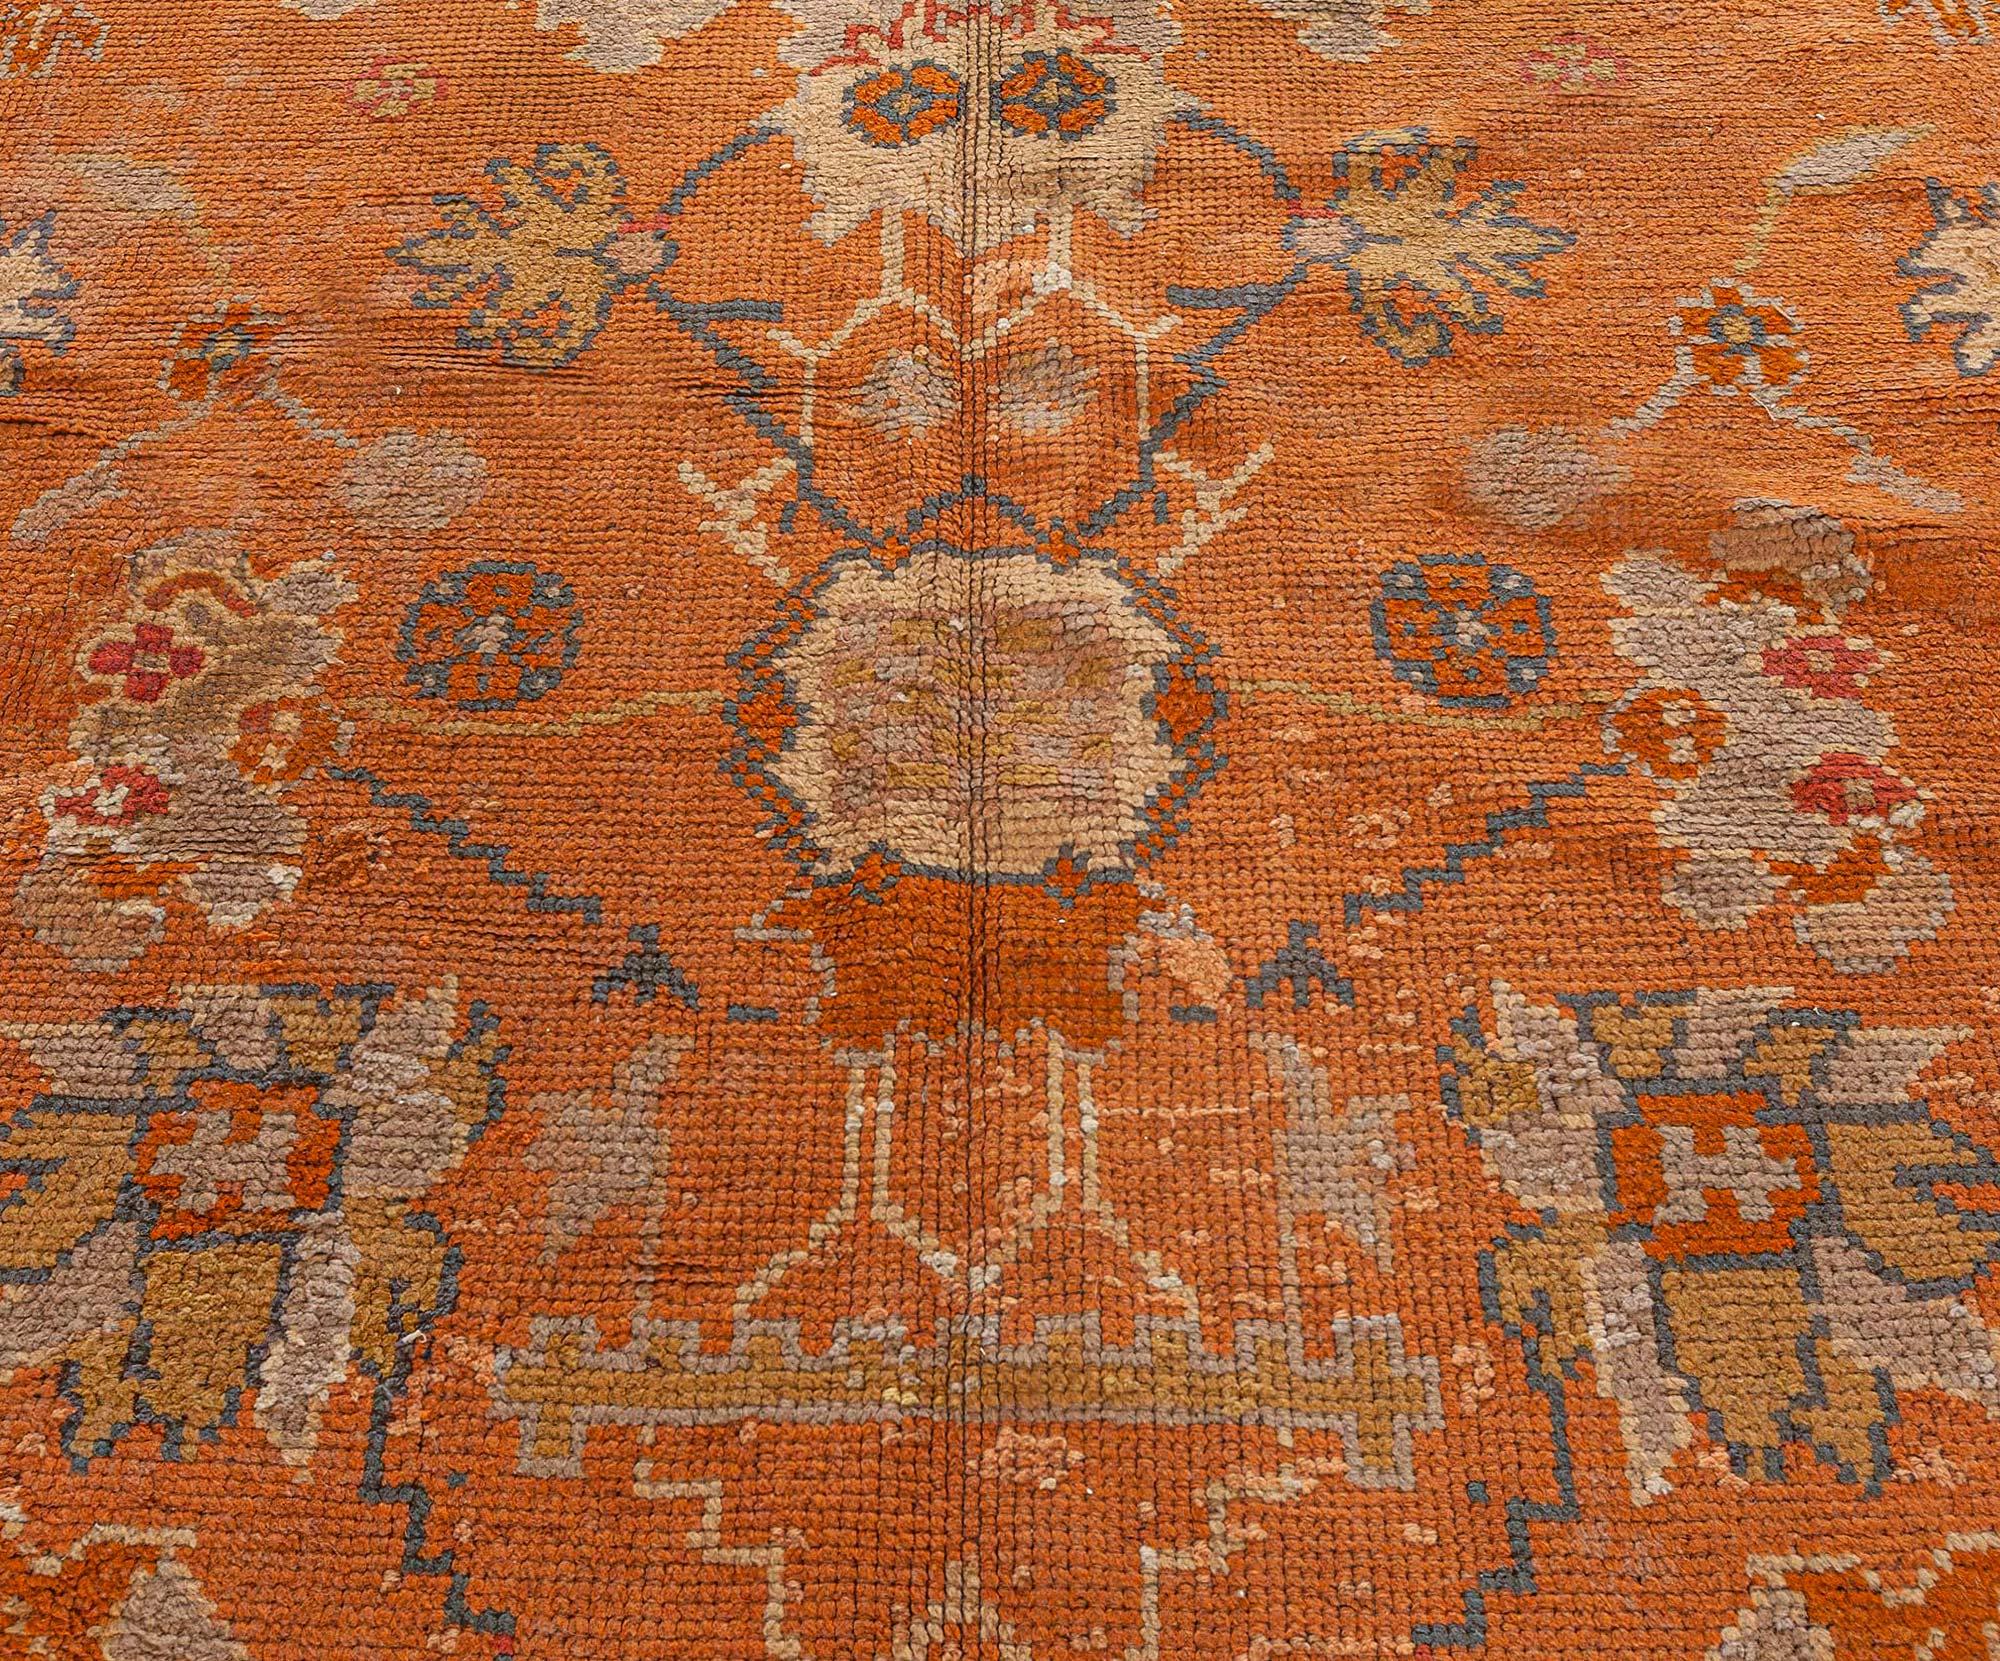 Antique Turkish Oushak Beige Orange Handwoven Wool rug
Size: 12'0